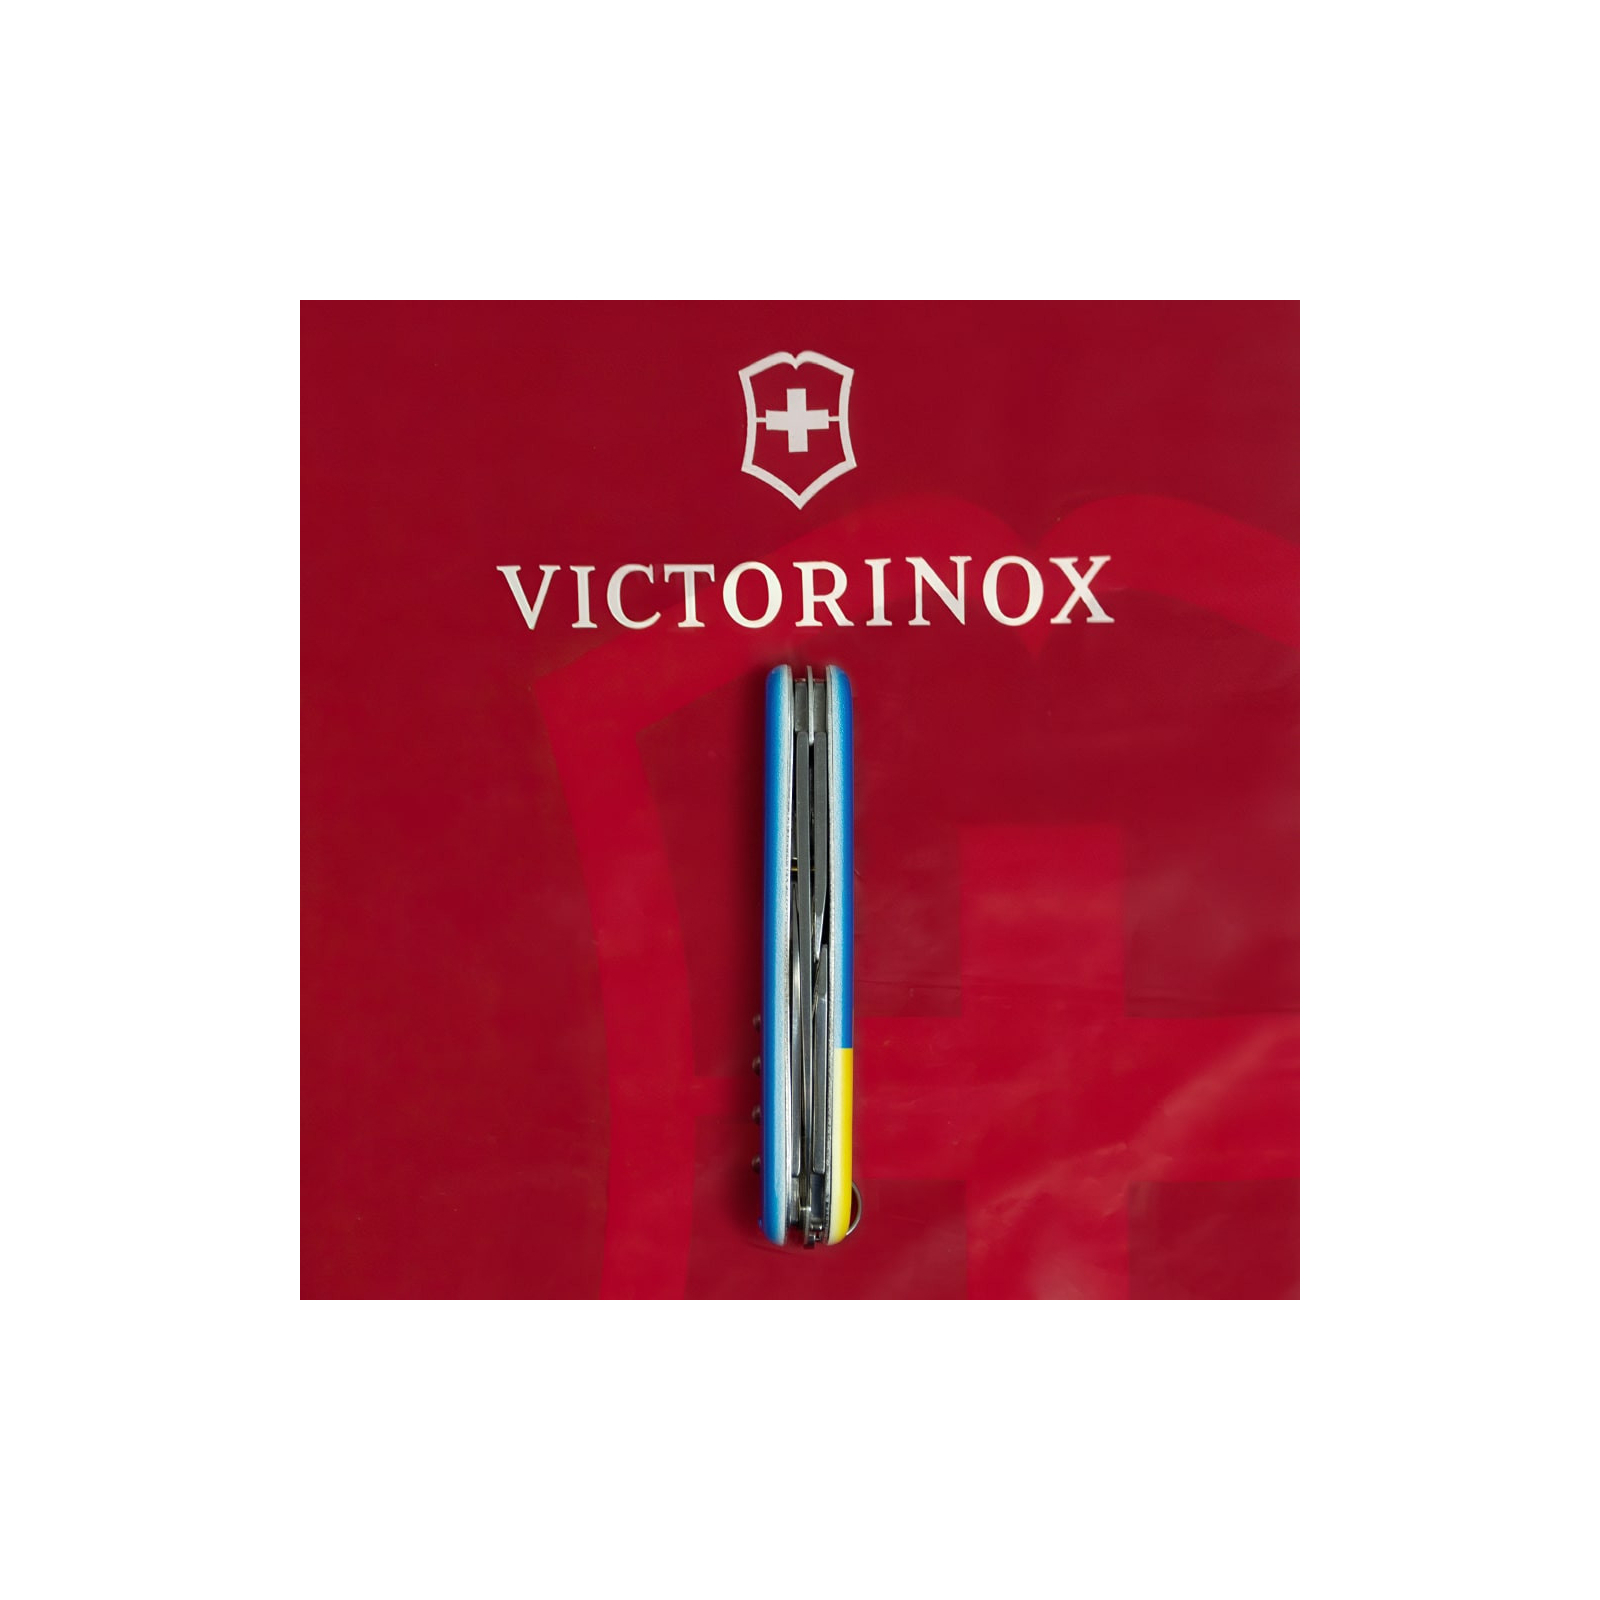 Нож Victorinox Spartan Ukraine 91 мм Жовто-синій малюнок (1.3603.7_T3100p) изображение 8